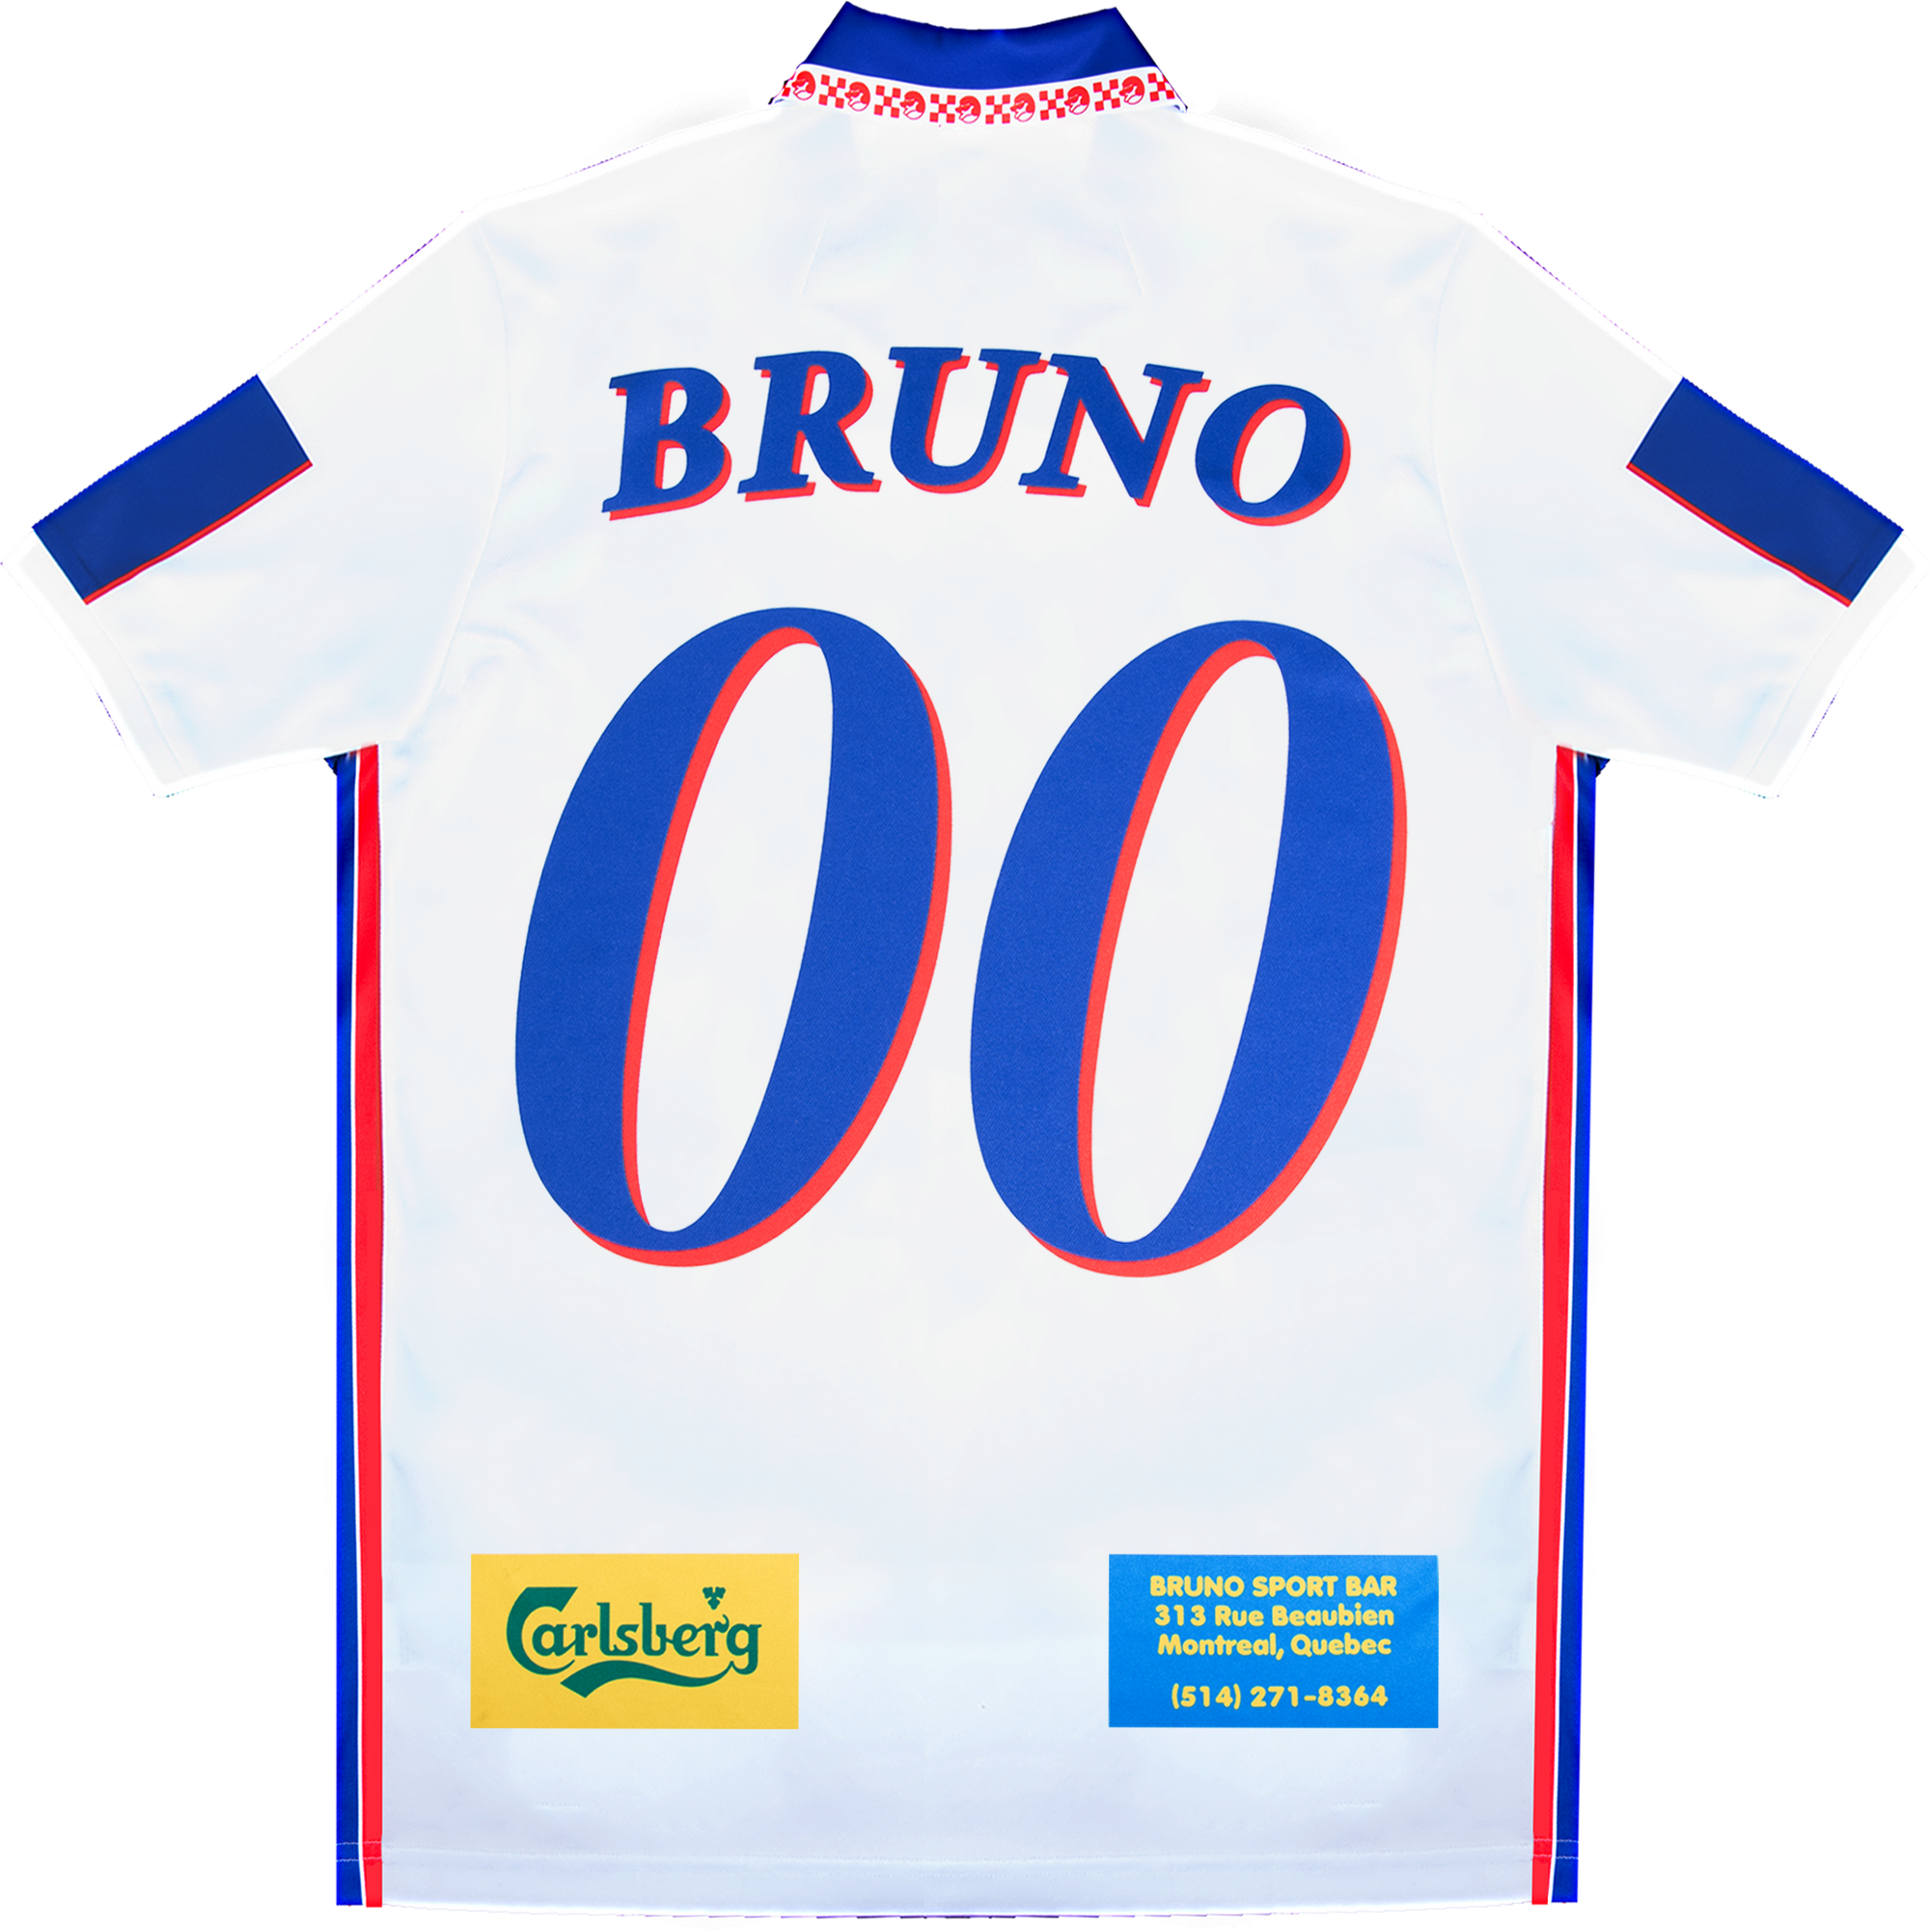 Classic Grip Bruno Home Jersey White